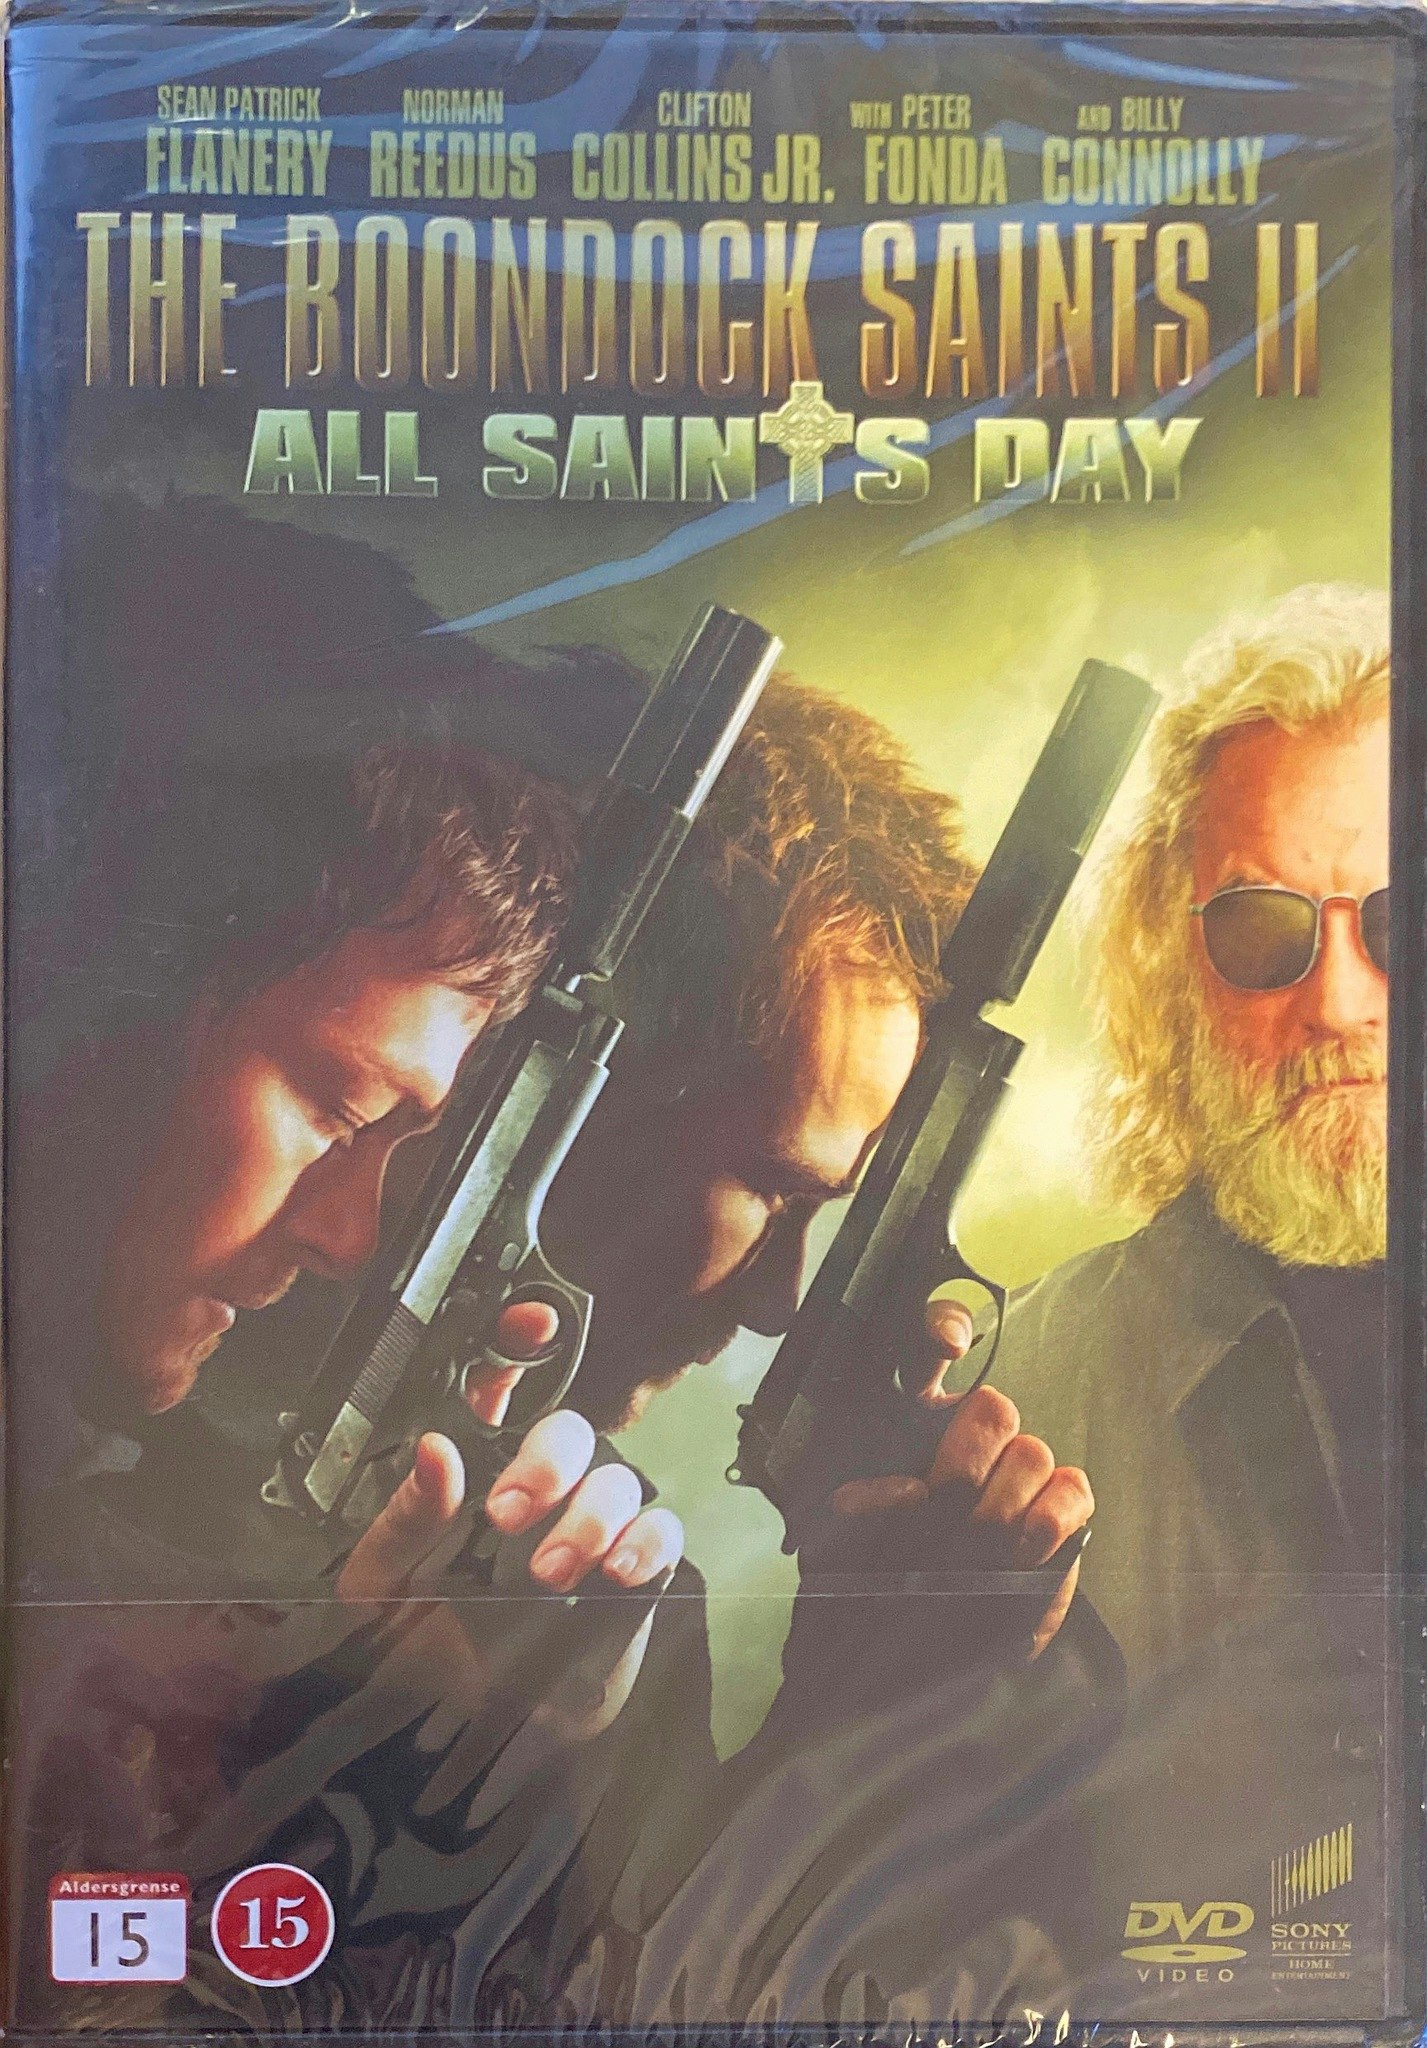 Boondock Saints II - All Saints Day (DVD)